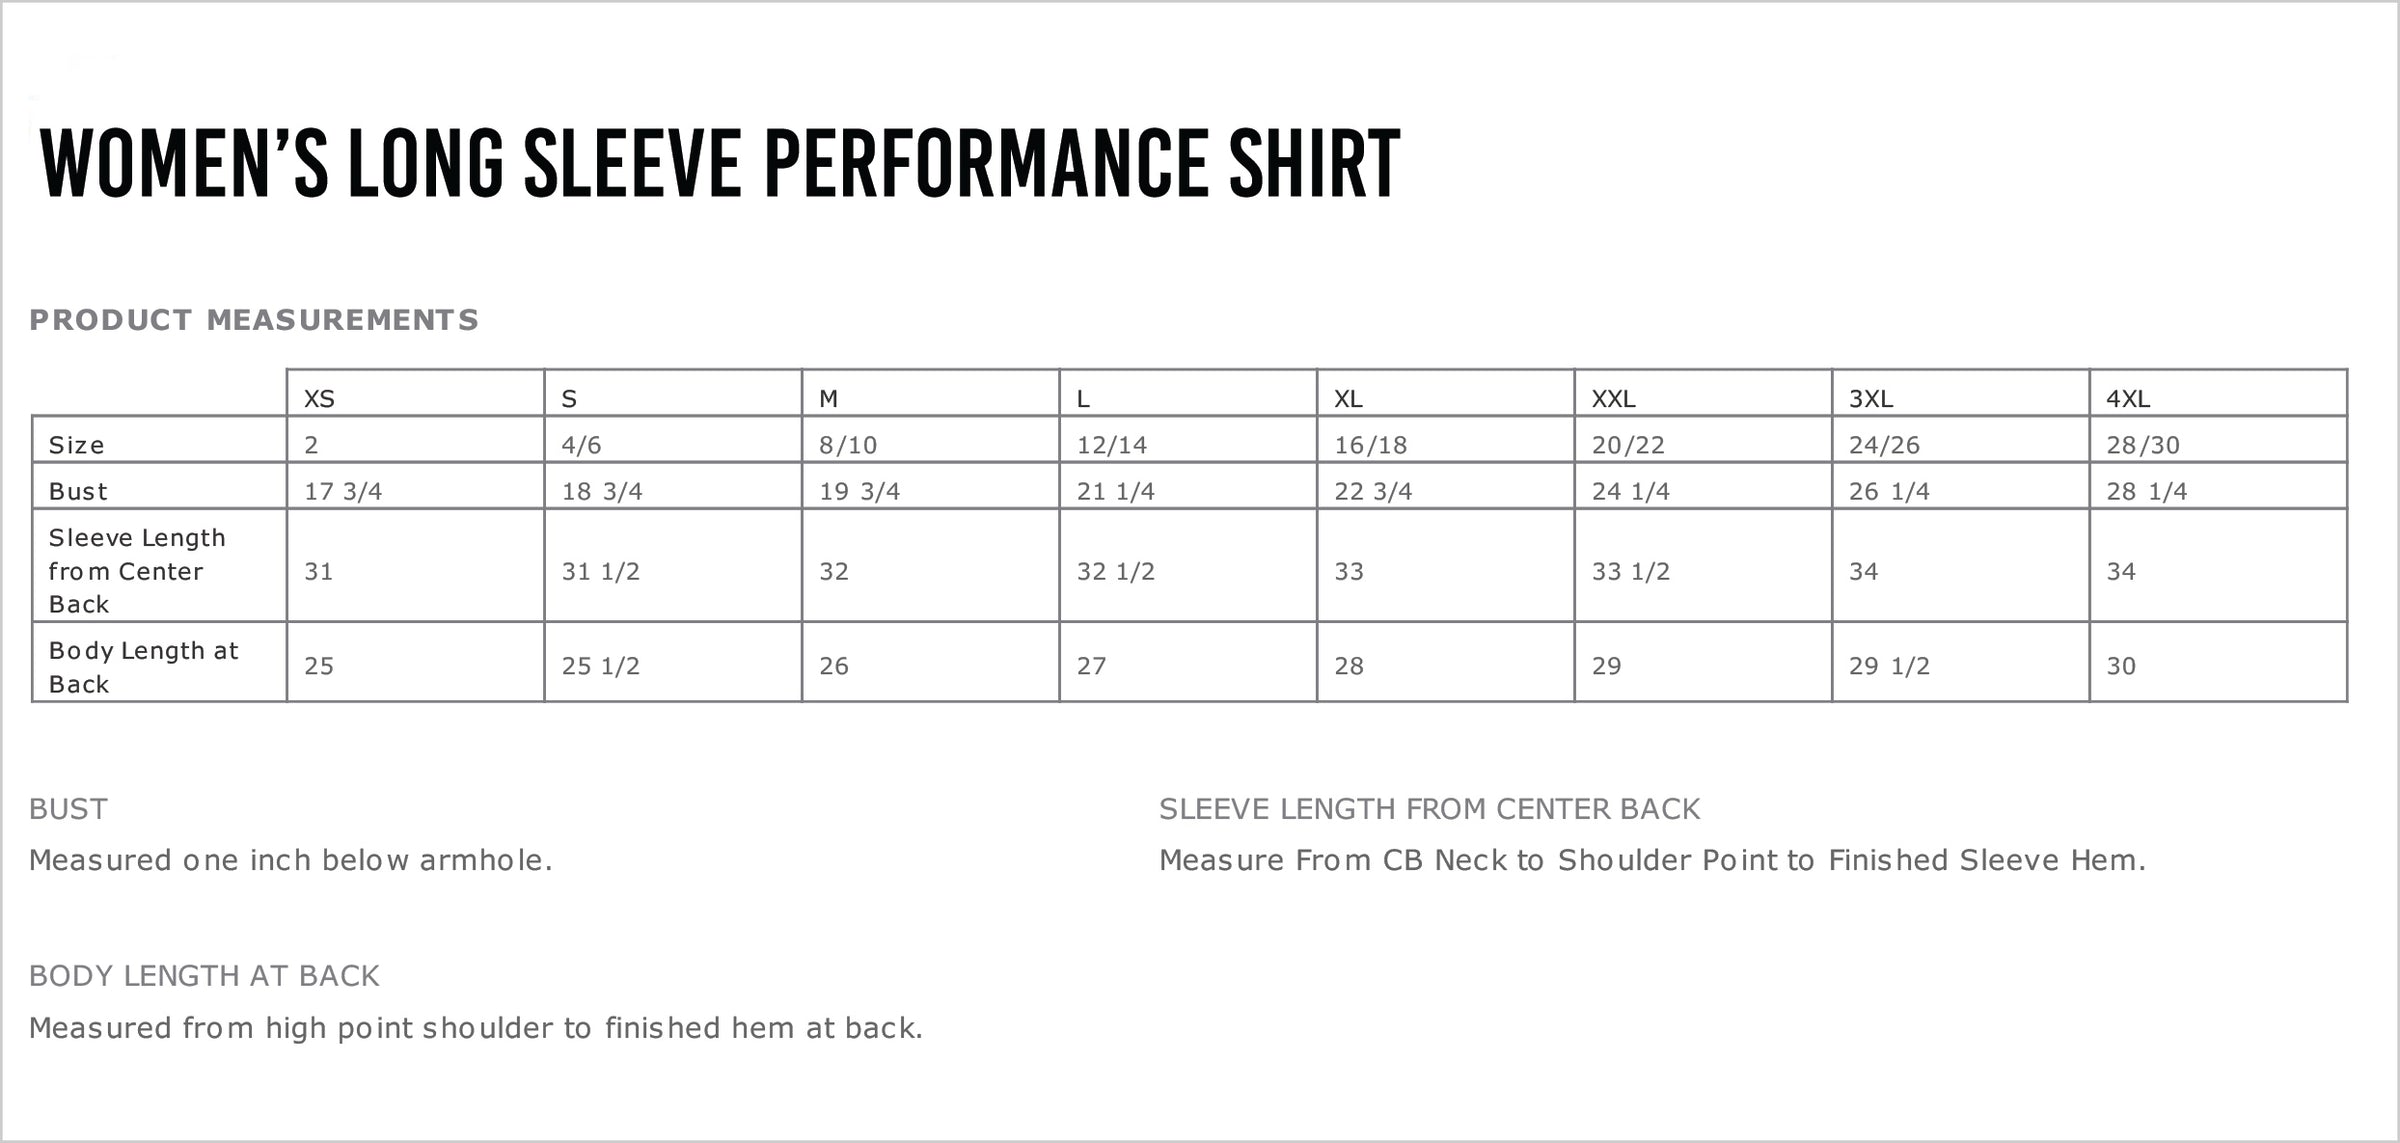 Smithtown Titans Performance T-Shirt – Blatant Team Store